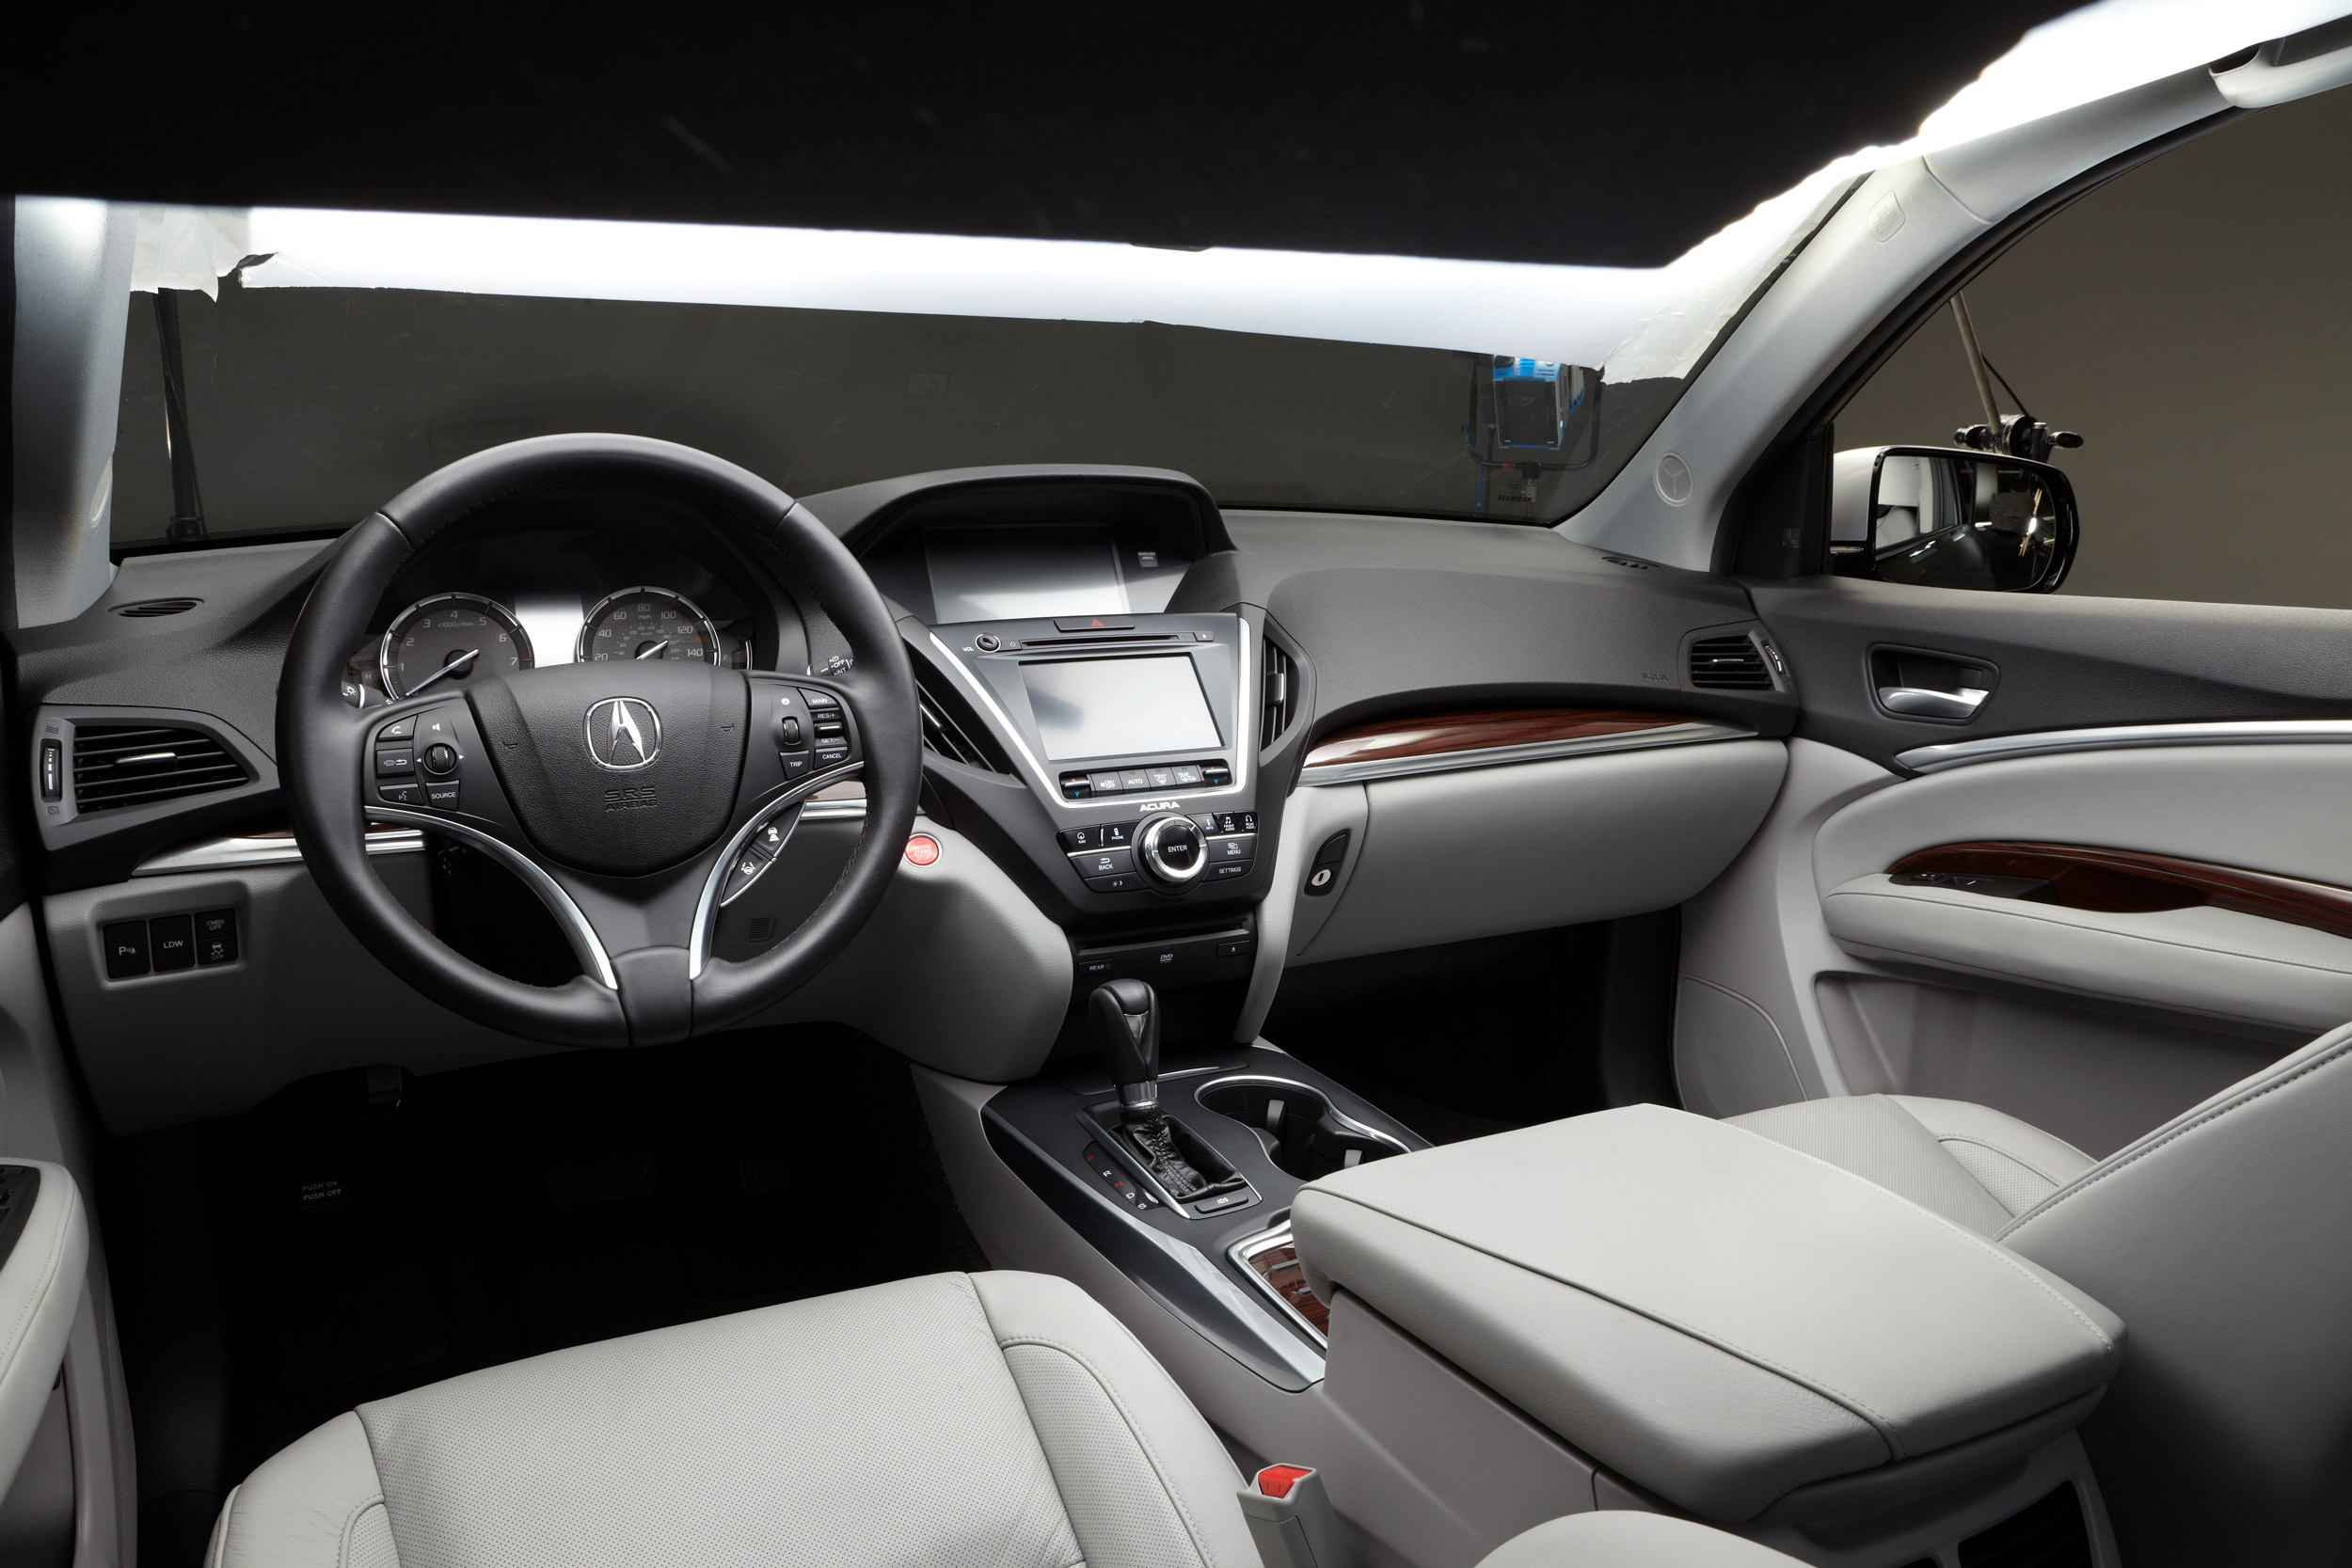 John Early High-End Digital Retouching - Acura MDX Dash View Shot In Studio